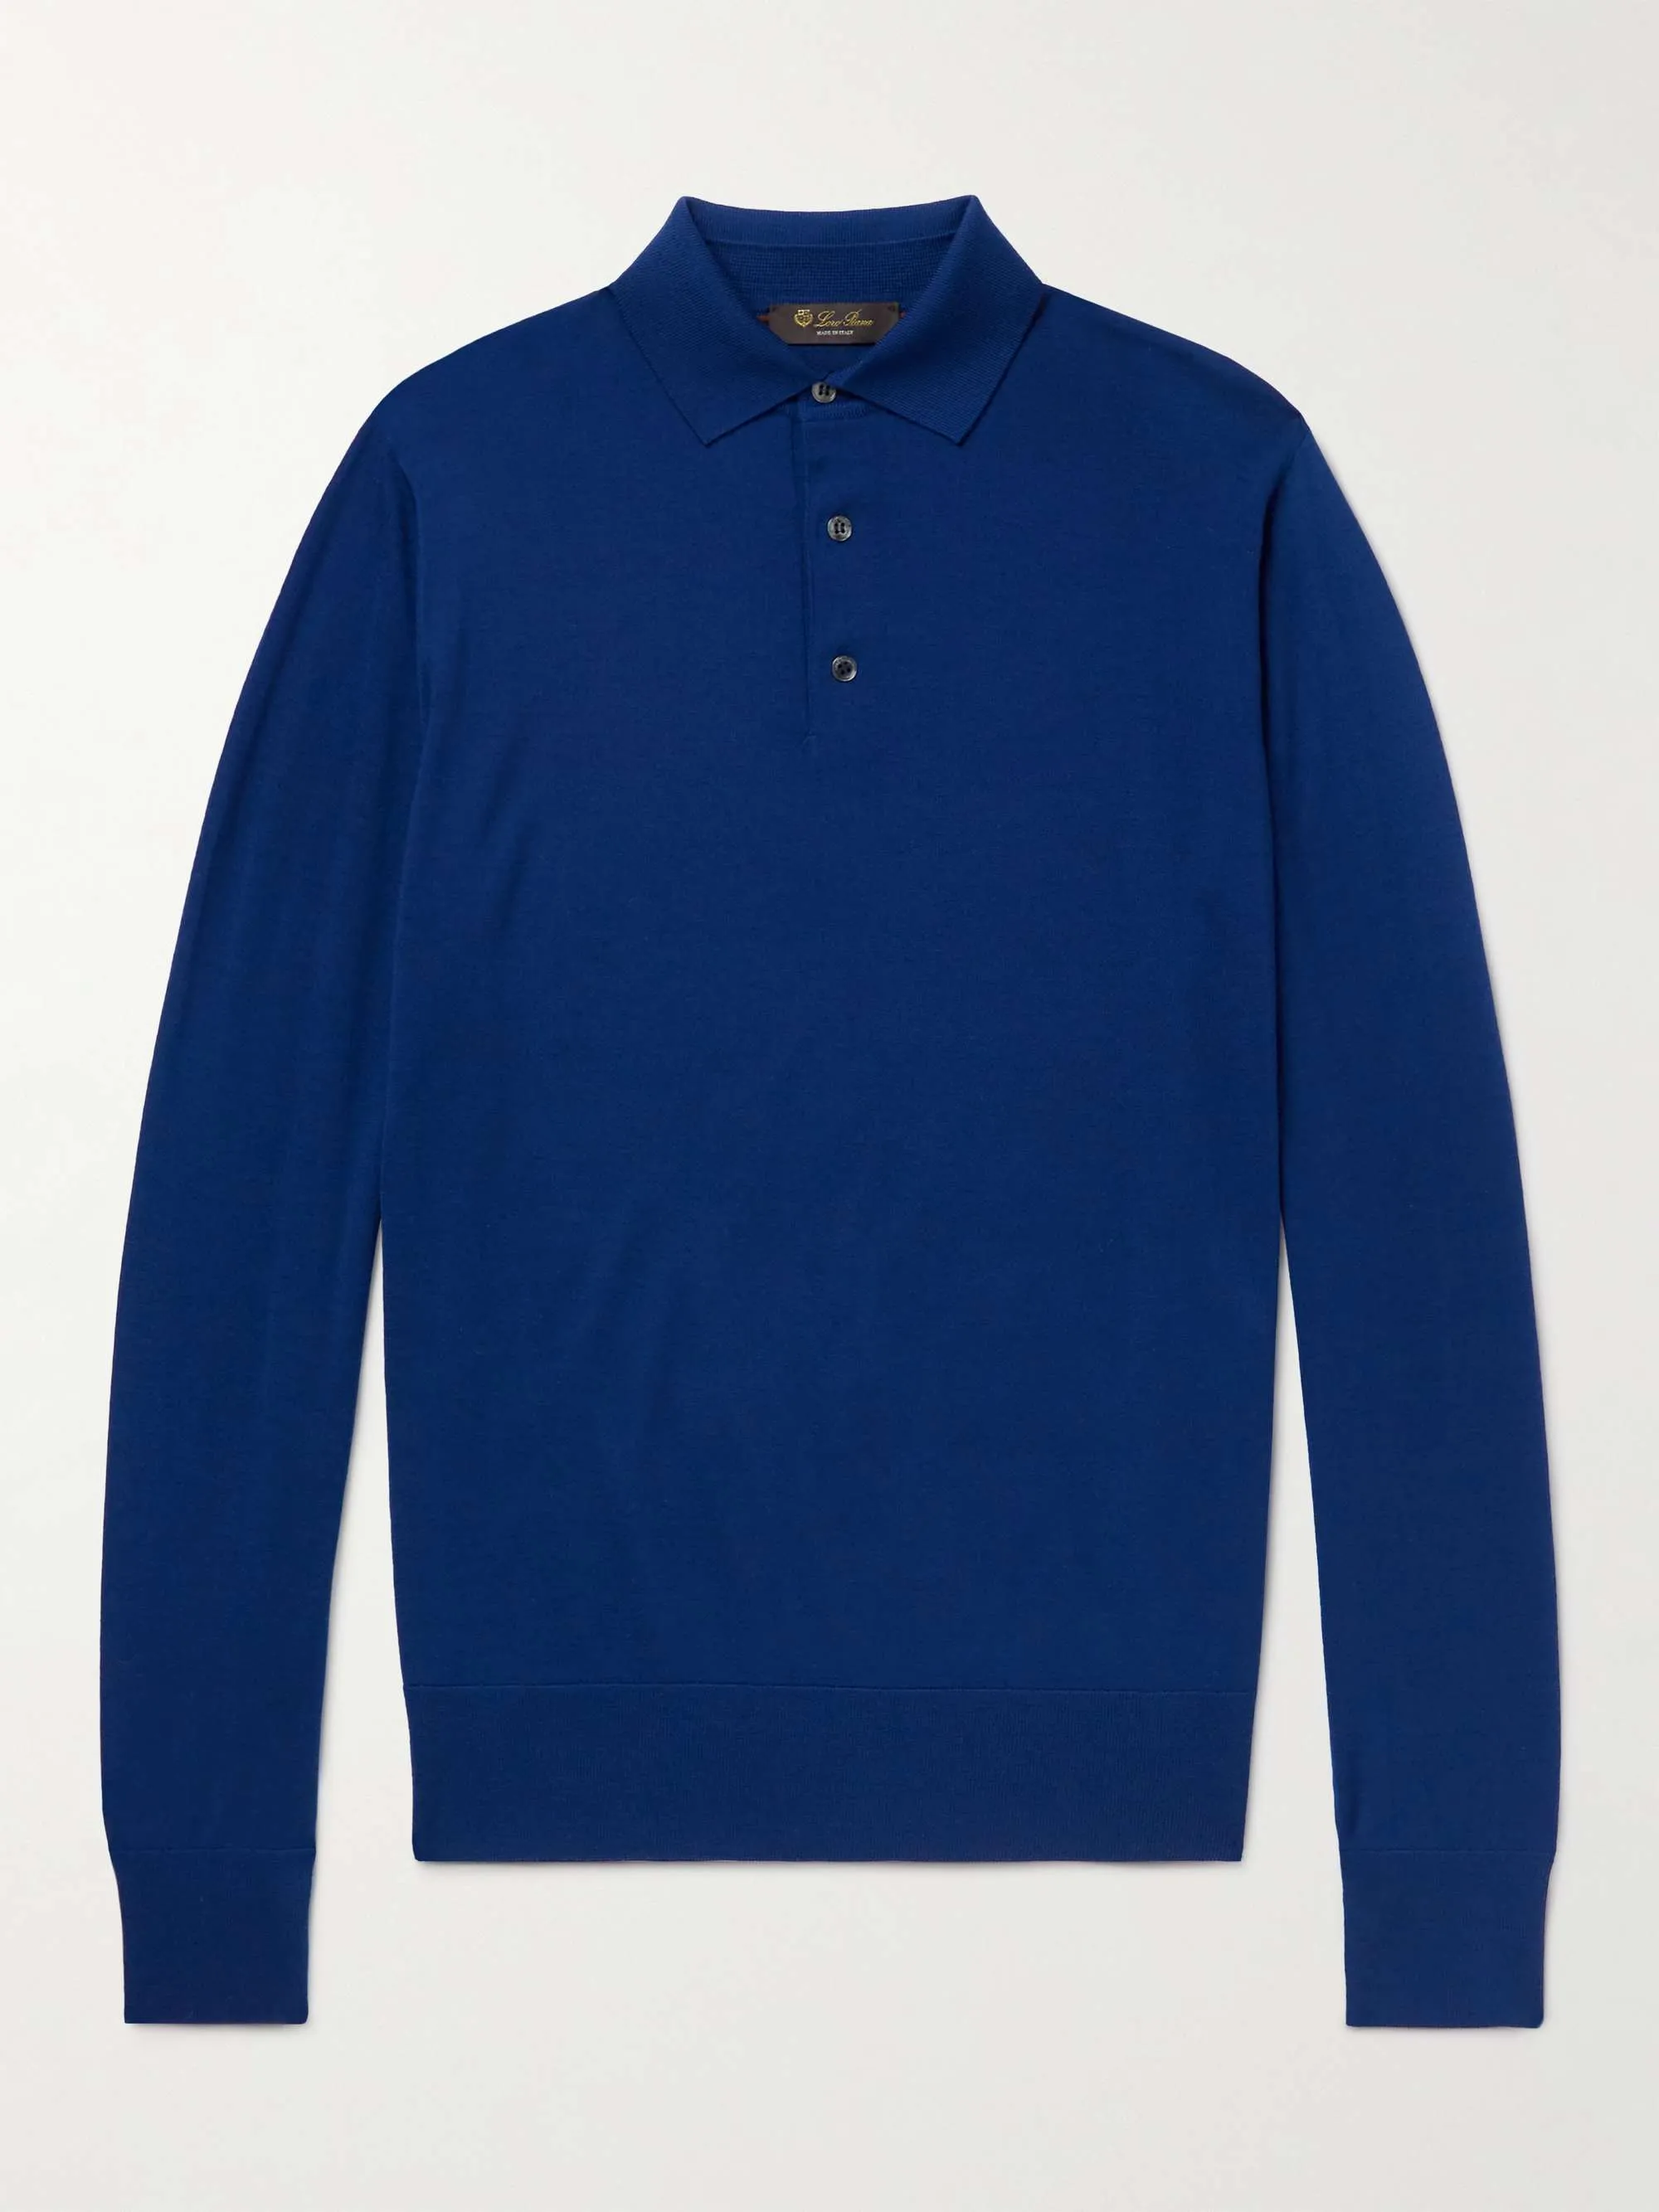 Loro Klavier Designer-Shirt Männer Polos Langarmed Slim Fit Virgin Woll Polo Shirts Marine Blue Mode und Winter Tops